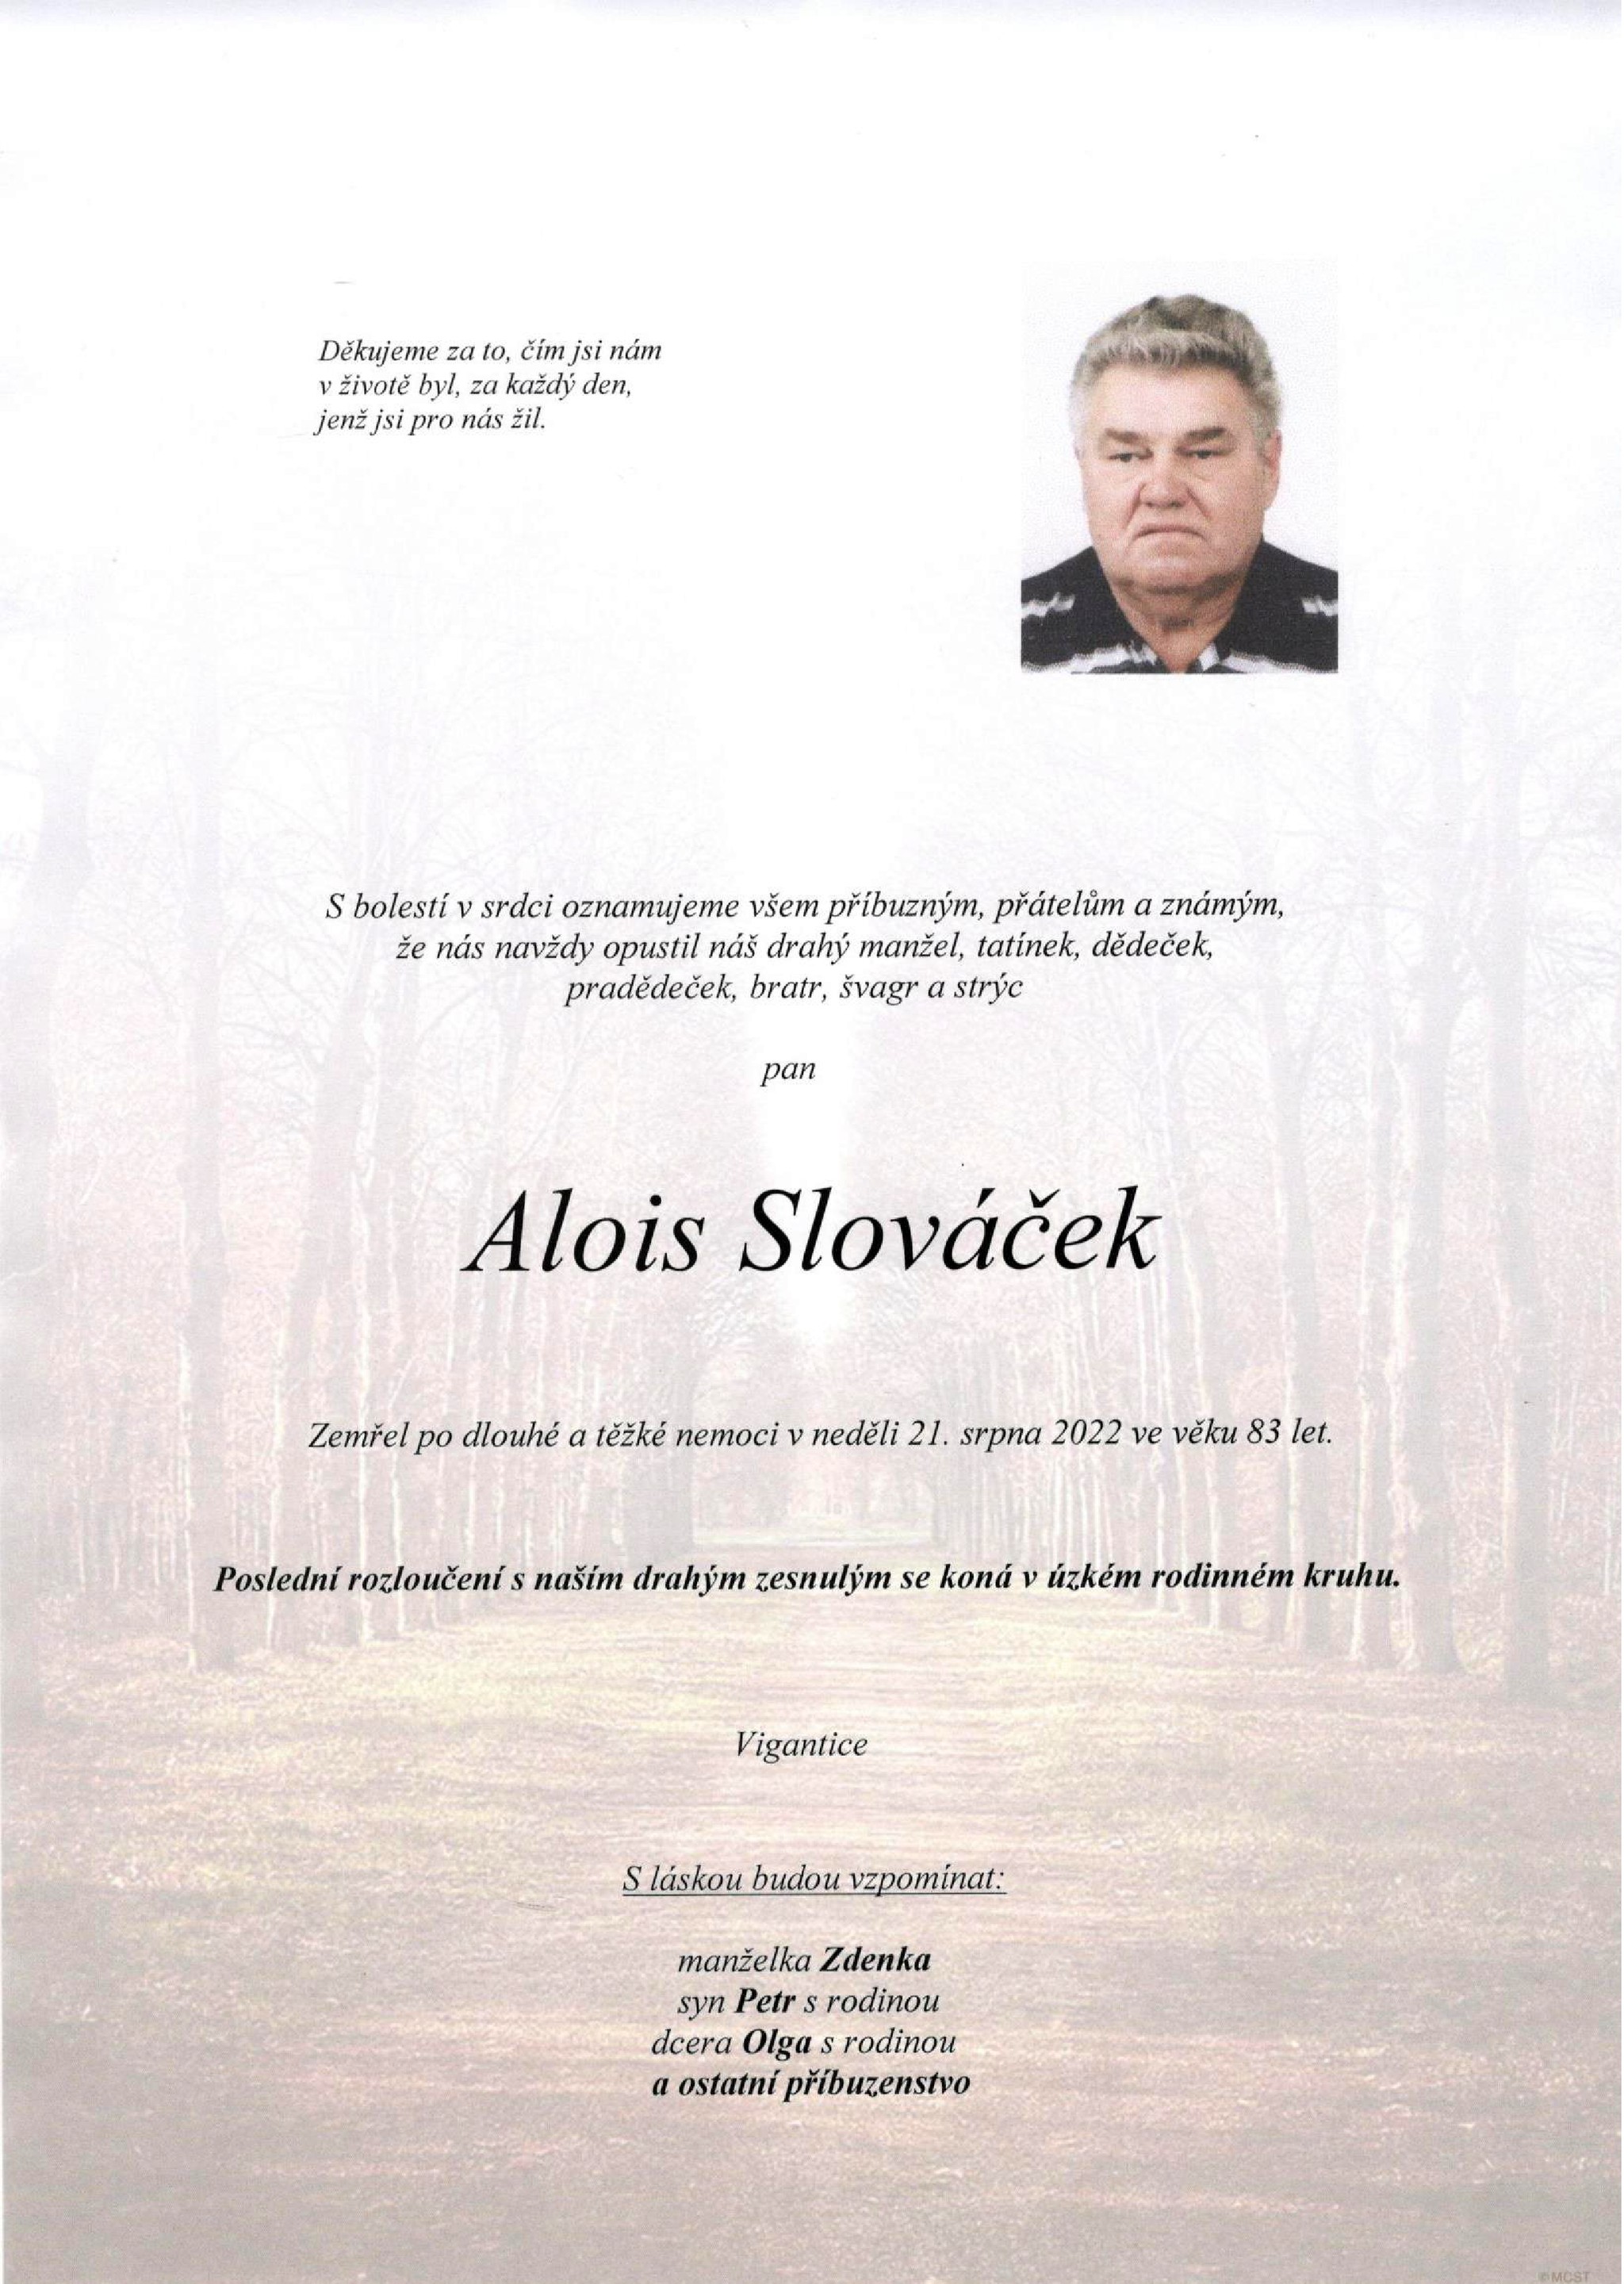 Alois Slováček